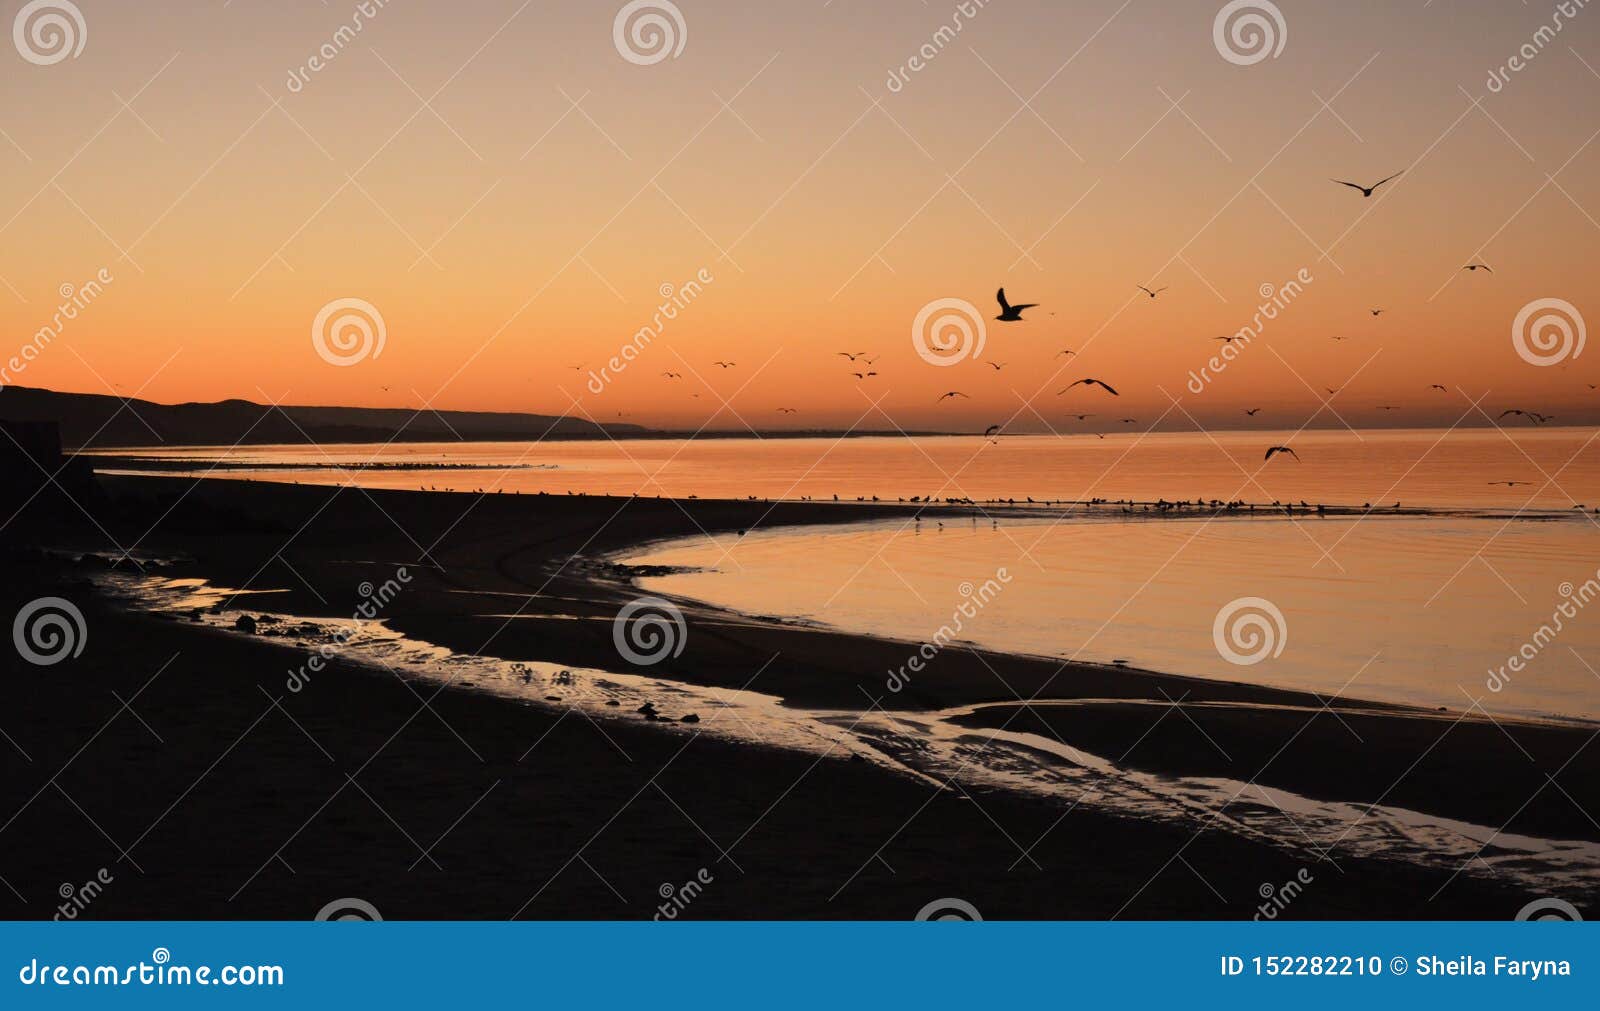 early morning sunrise in el golfo de santa clara mexico